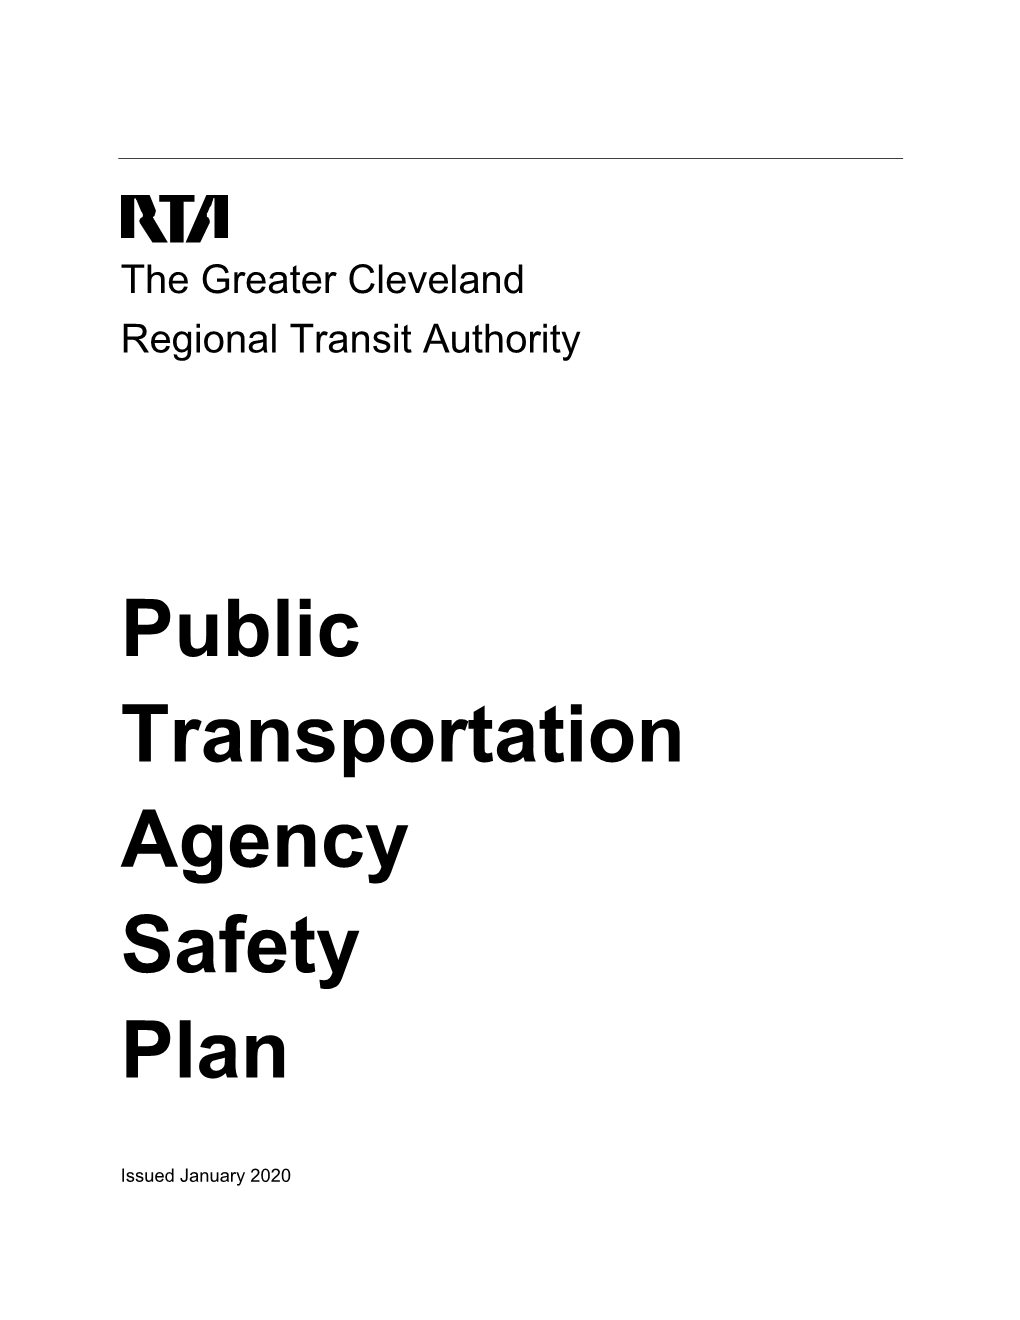 Public Transportation Agency Safety Plan